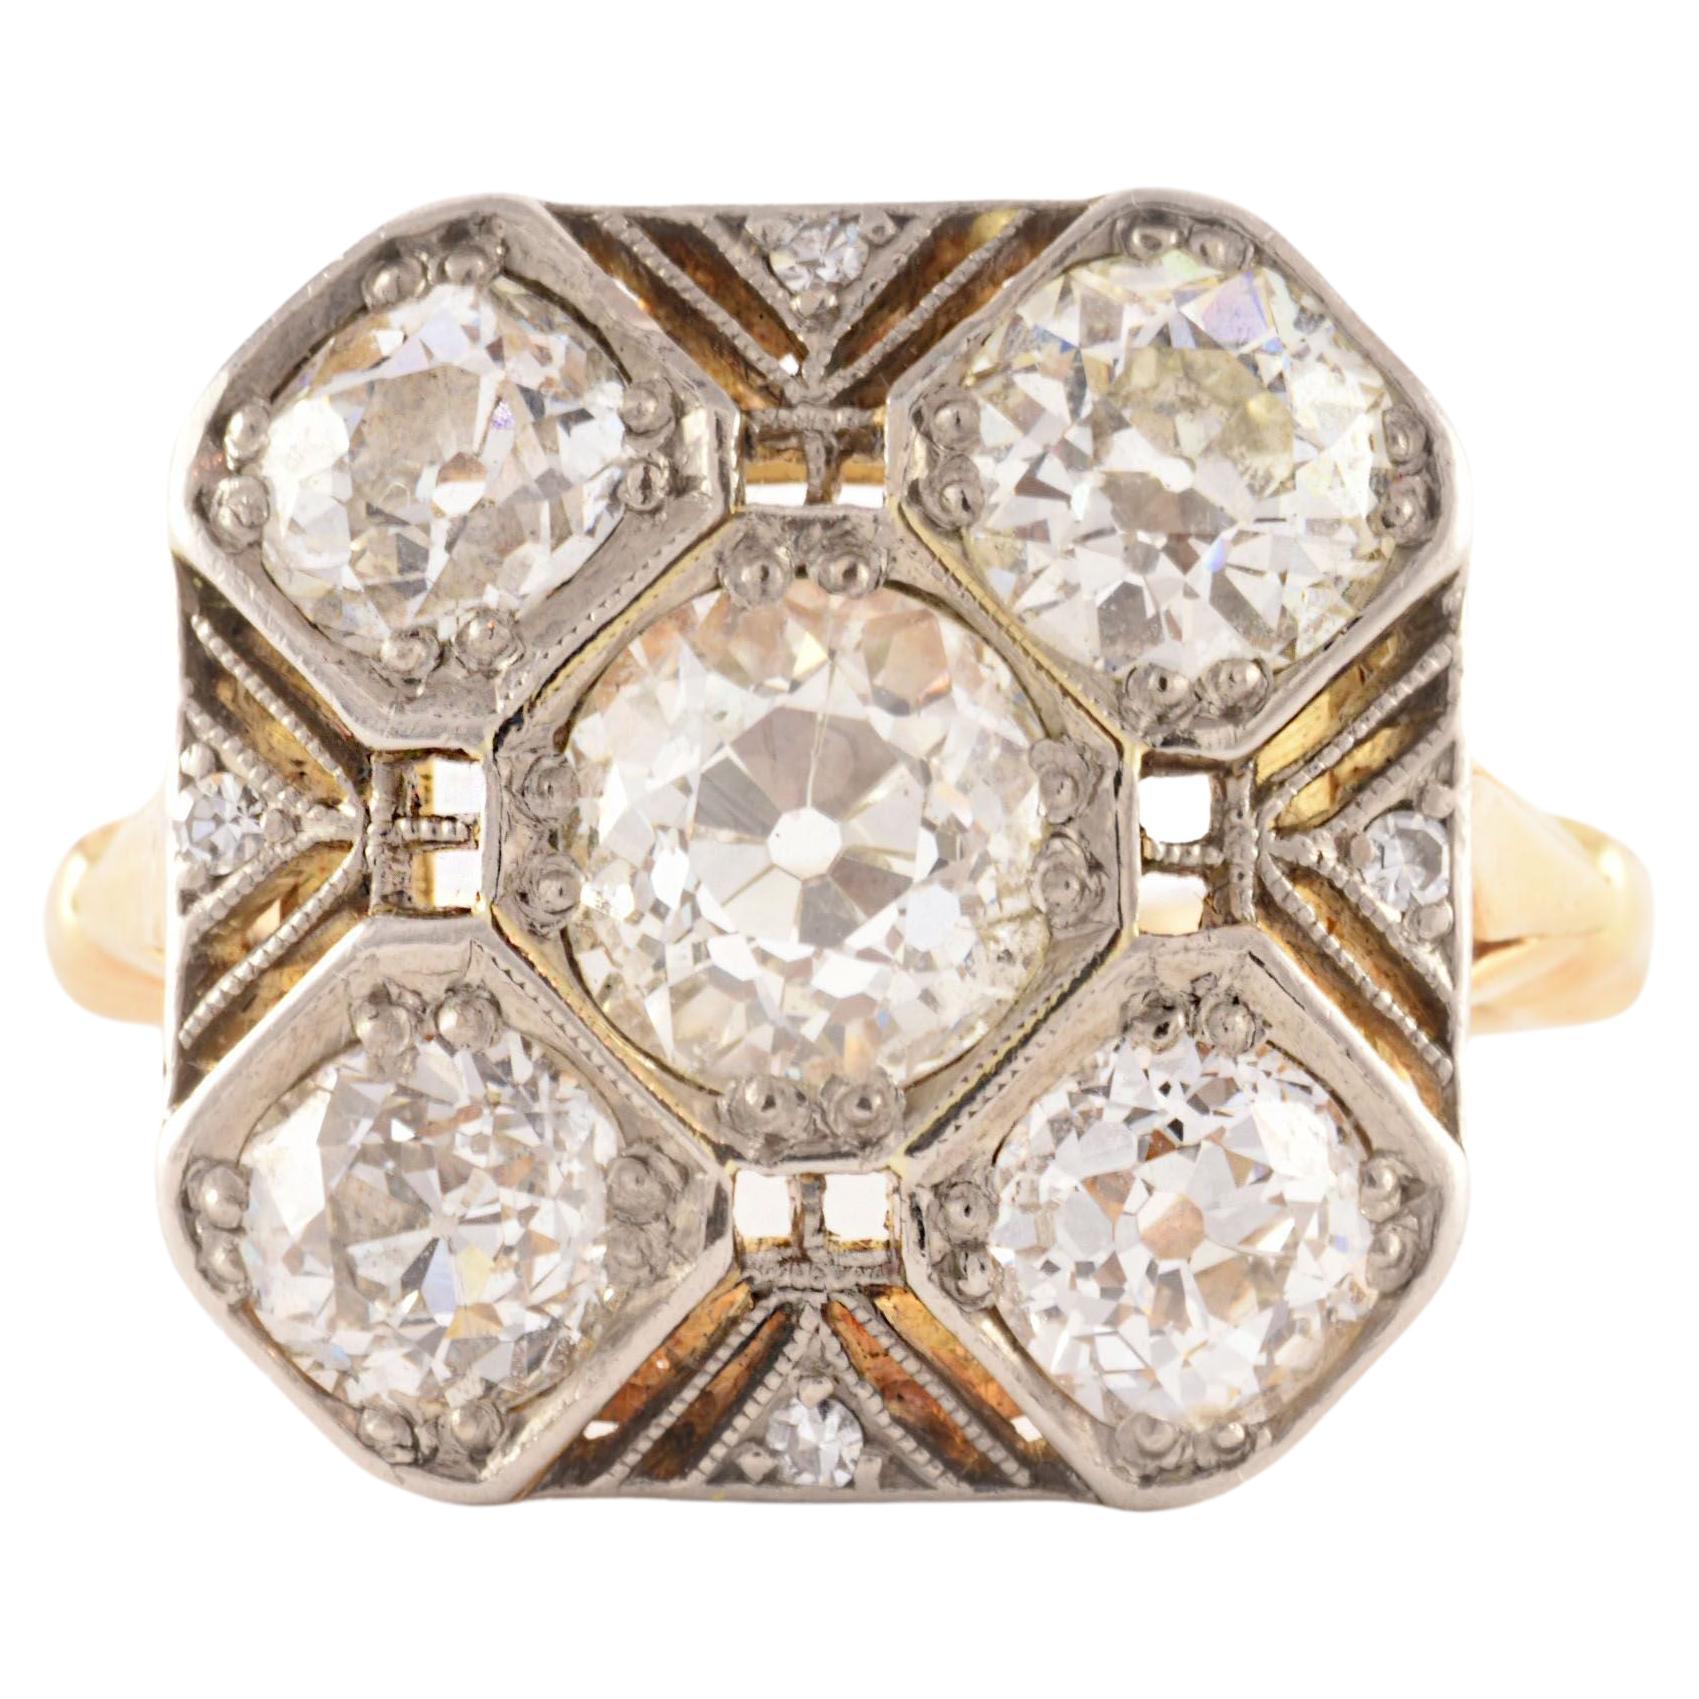  Art Deco Diamond Cocktail Ring